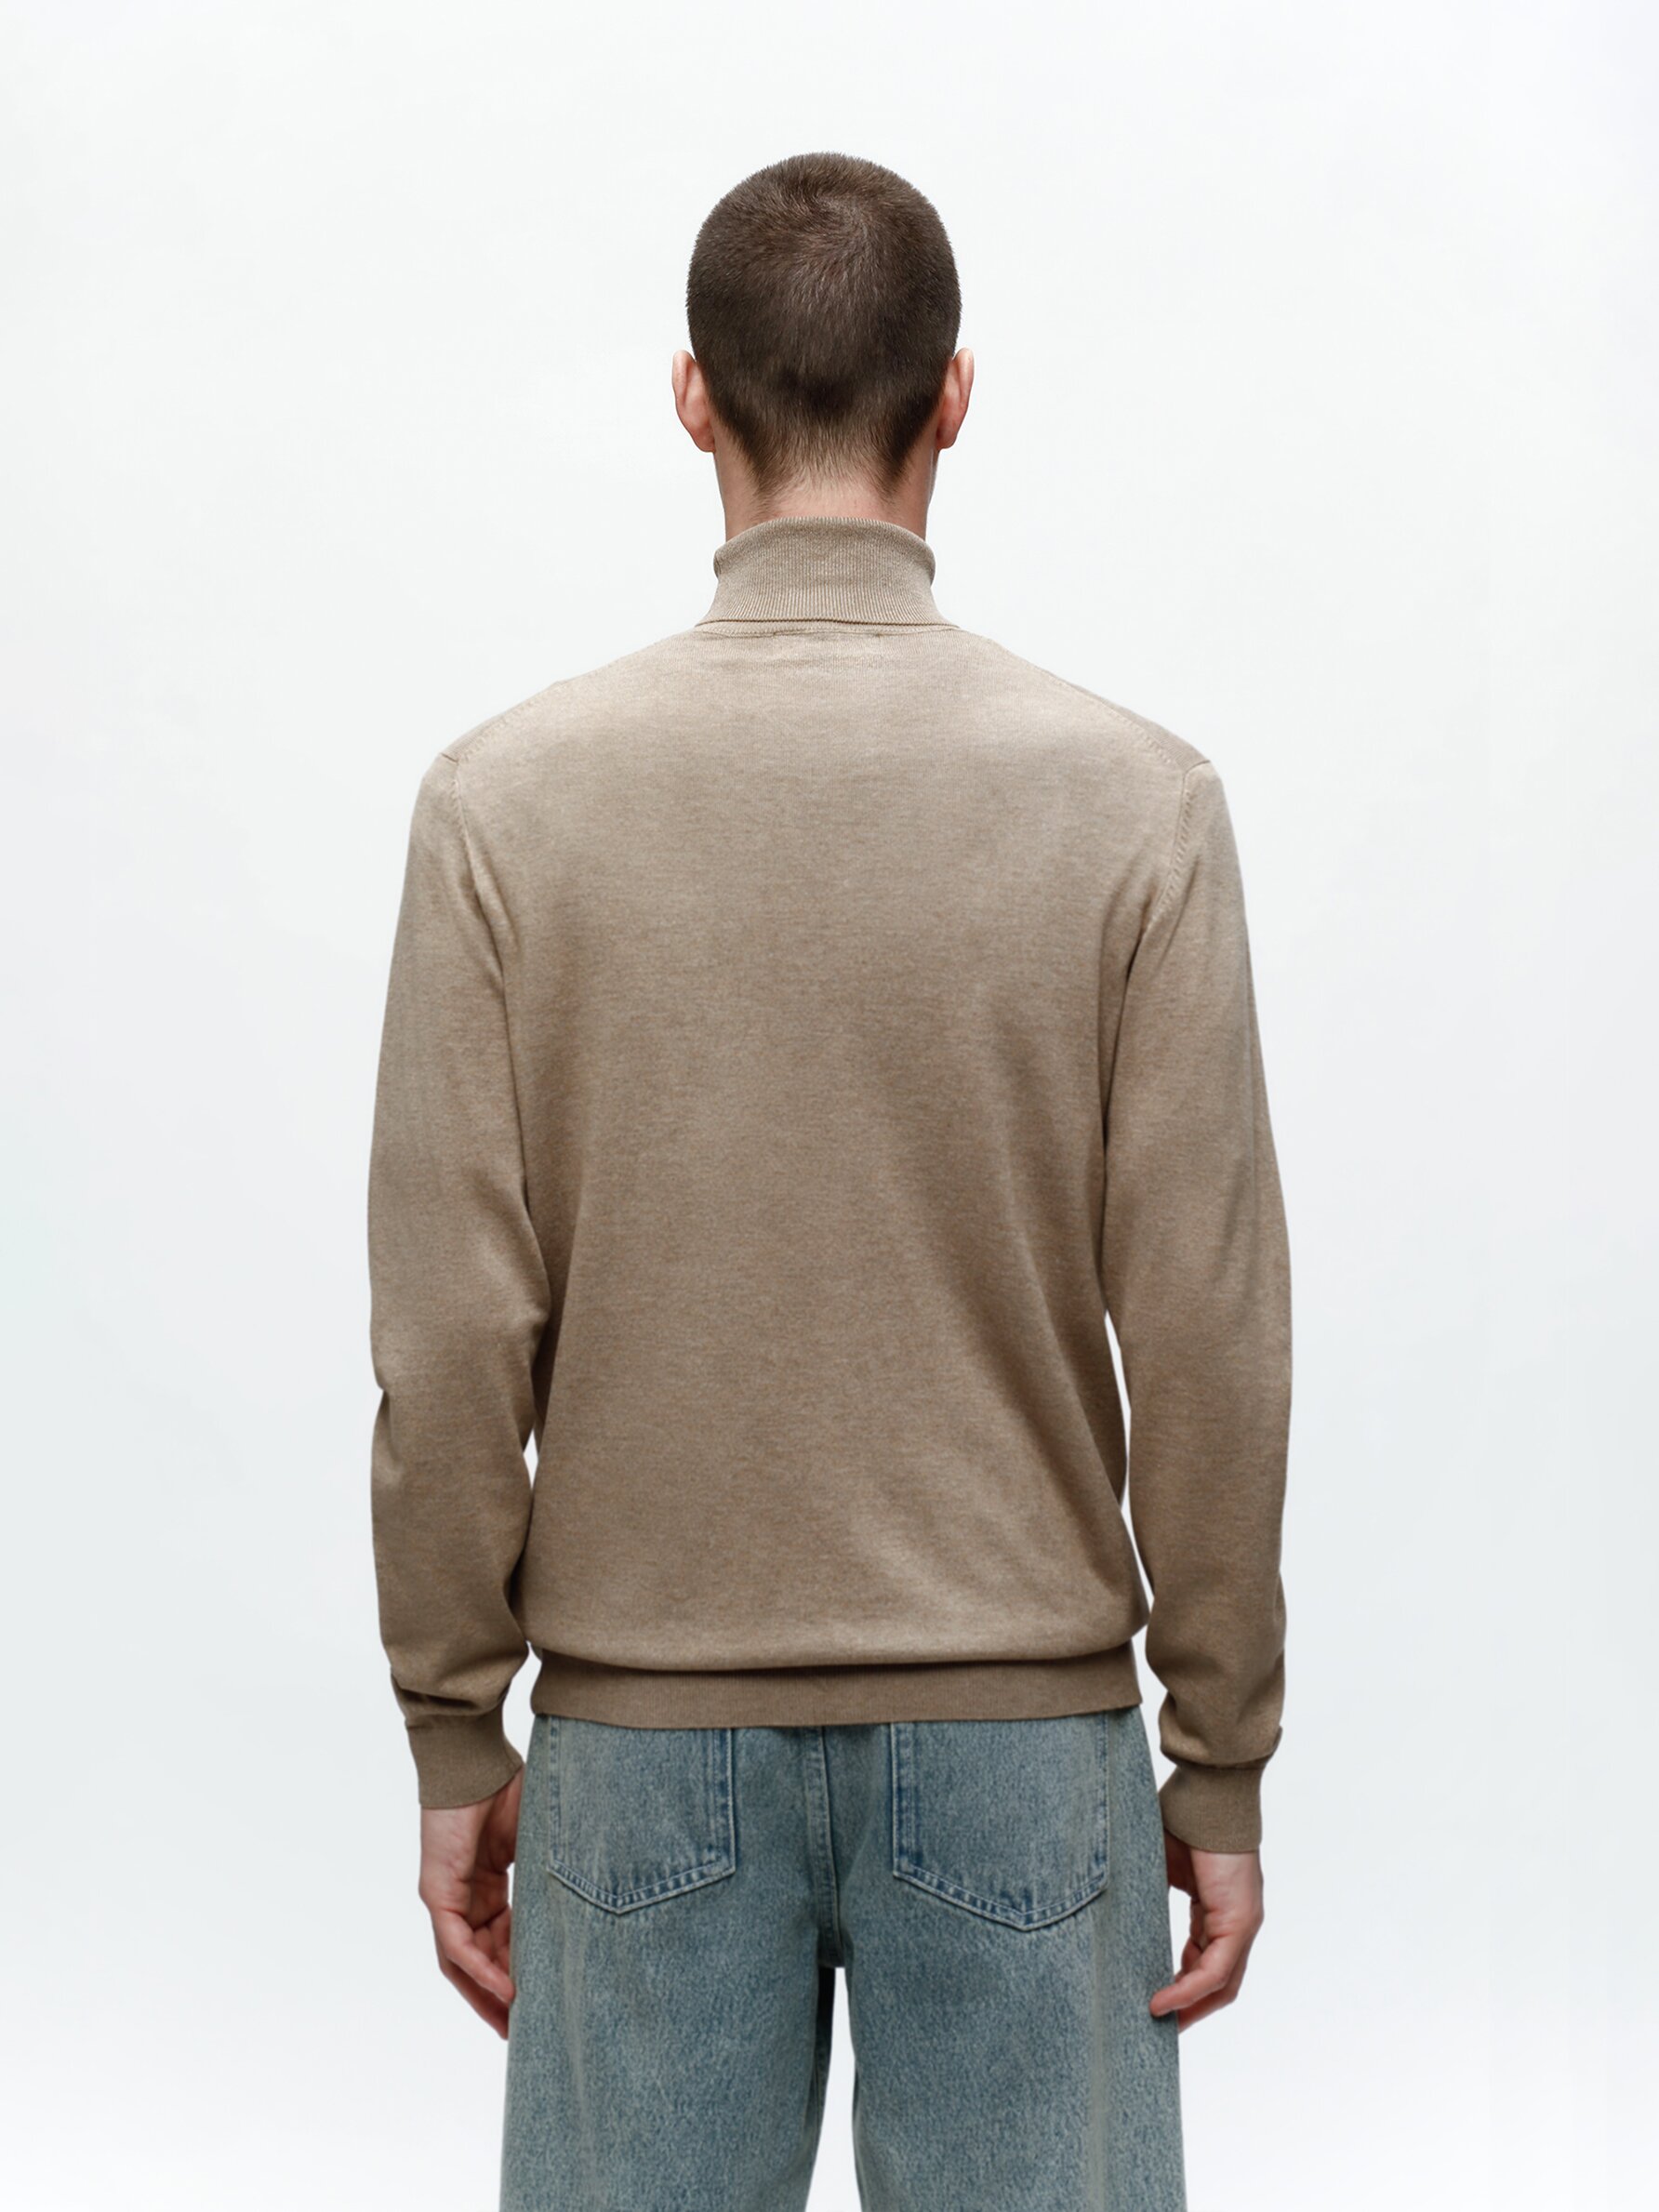 Turtleneck sweater - NEW IN - Man 